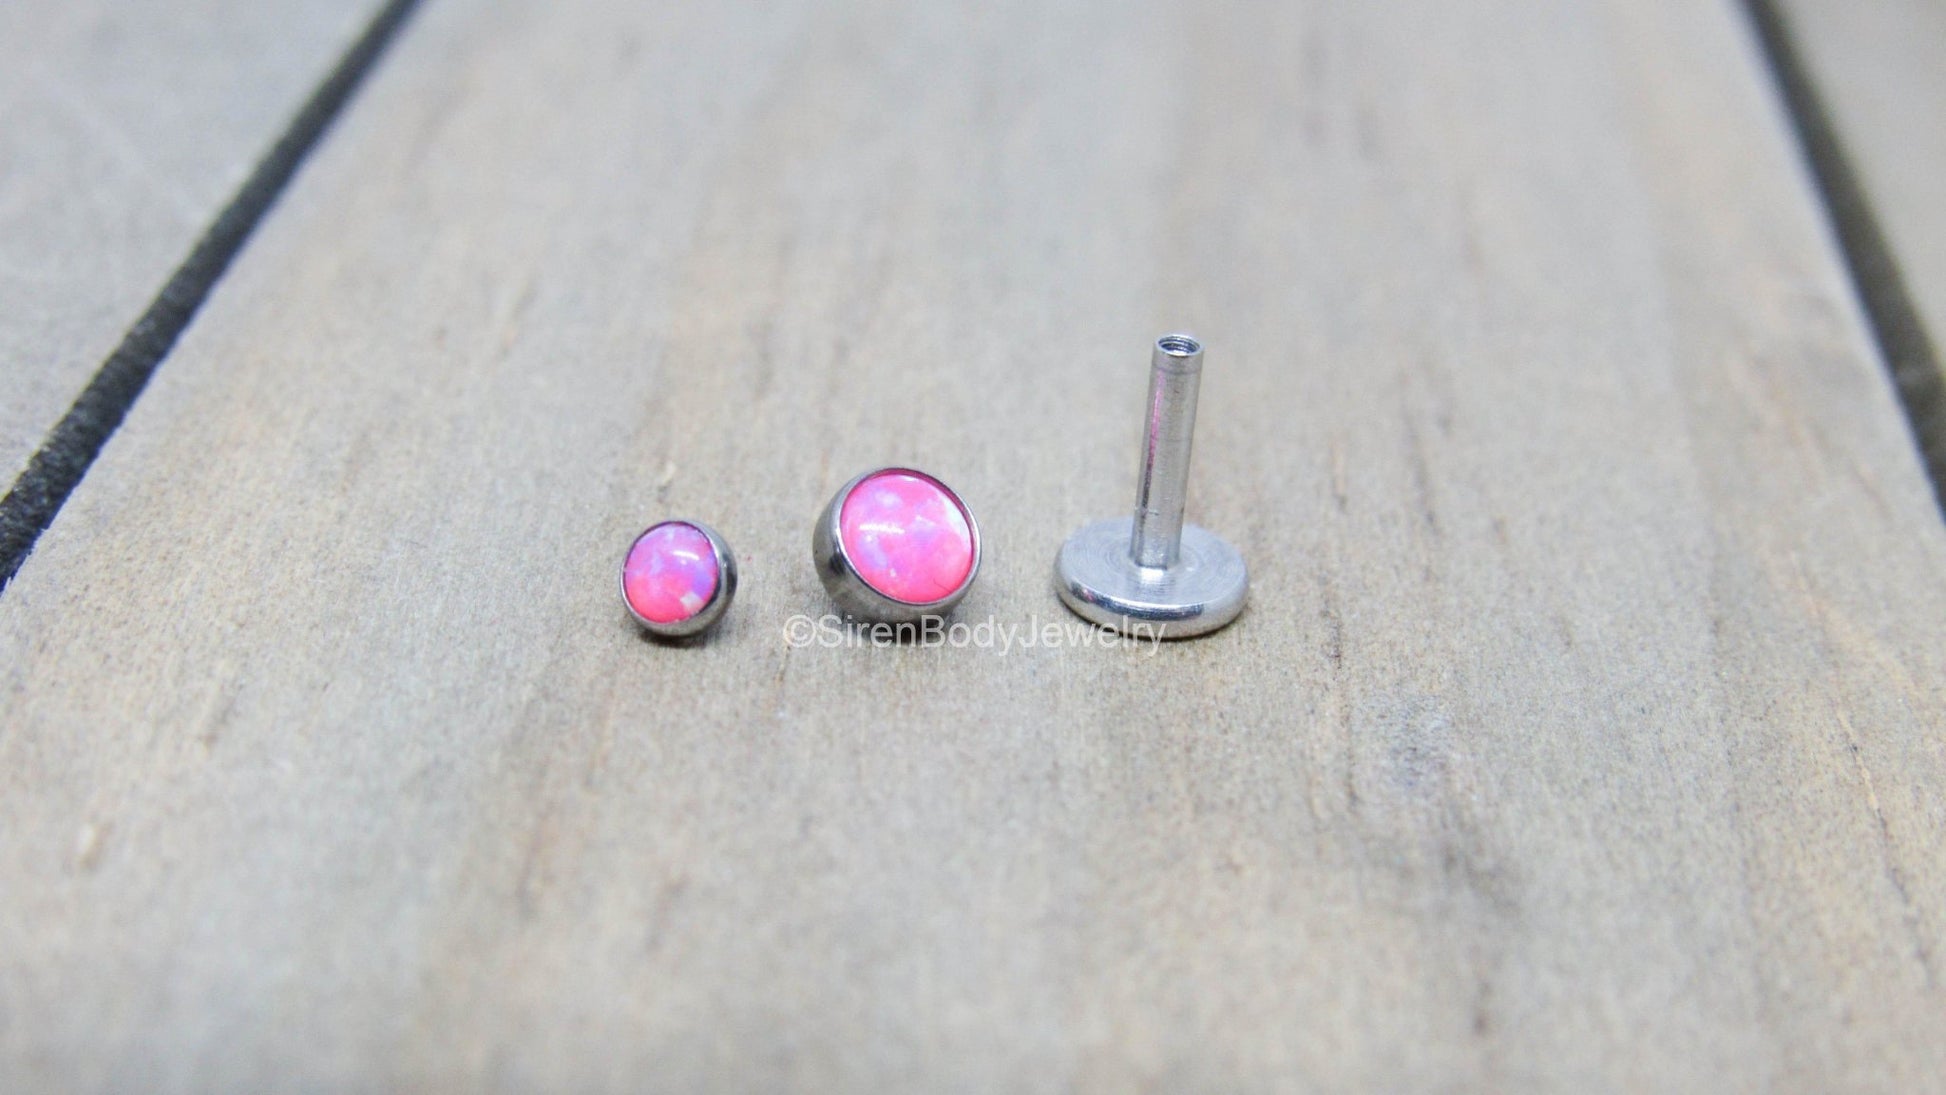 Pink opal flat back earring 16g pick your length conch earlobe lip helix piercing stud earring hypoallergenic titanium internally threaded - SirenBodyJewelry